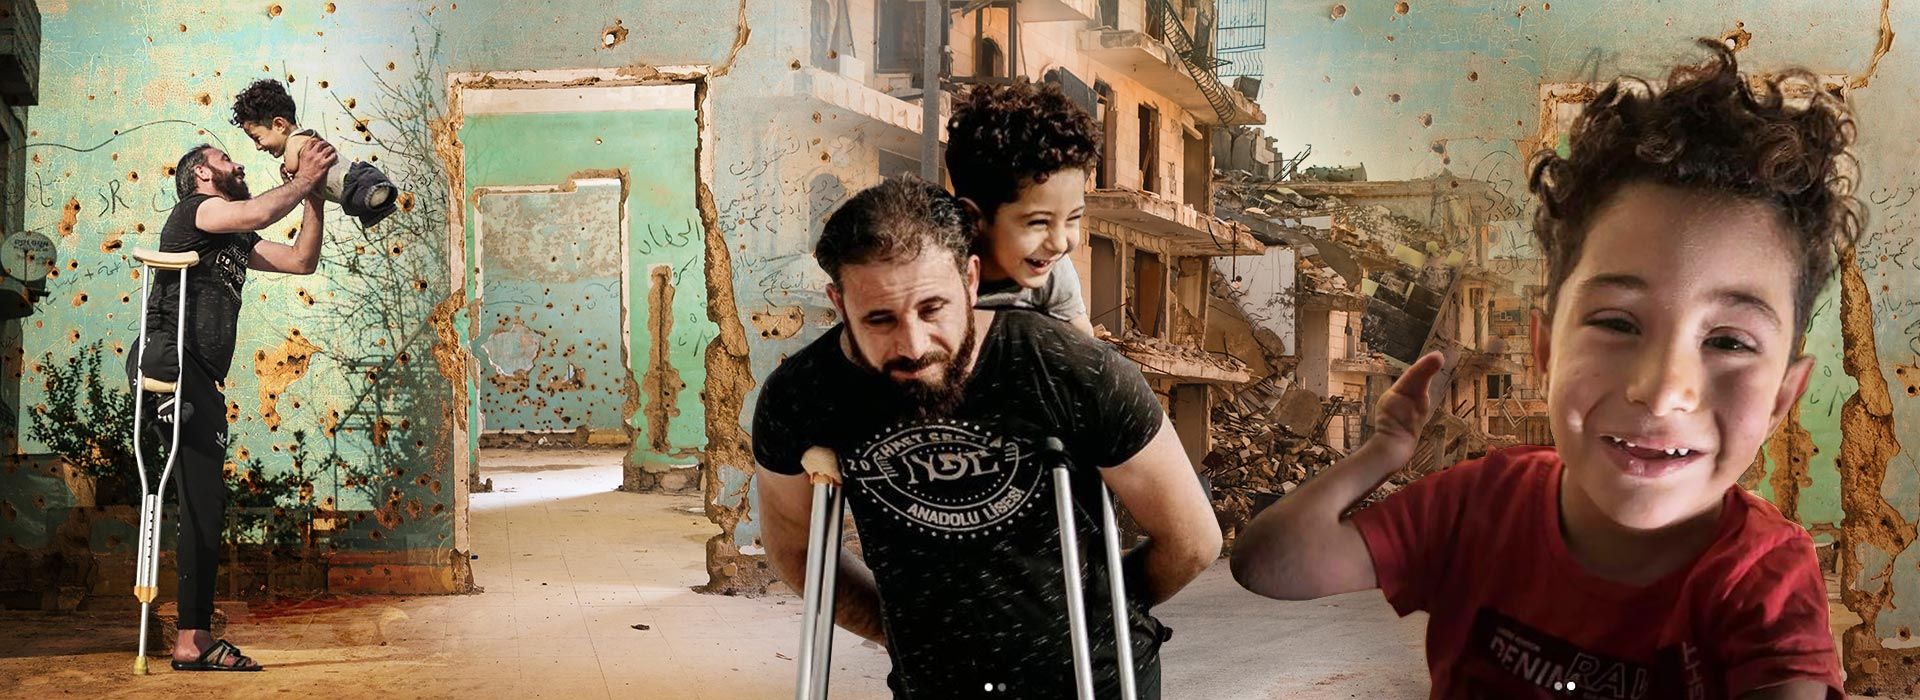 Mustafà bambino siriano senza braccia